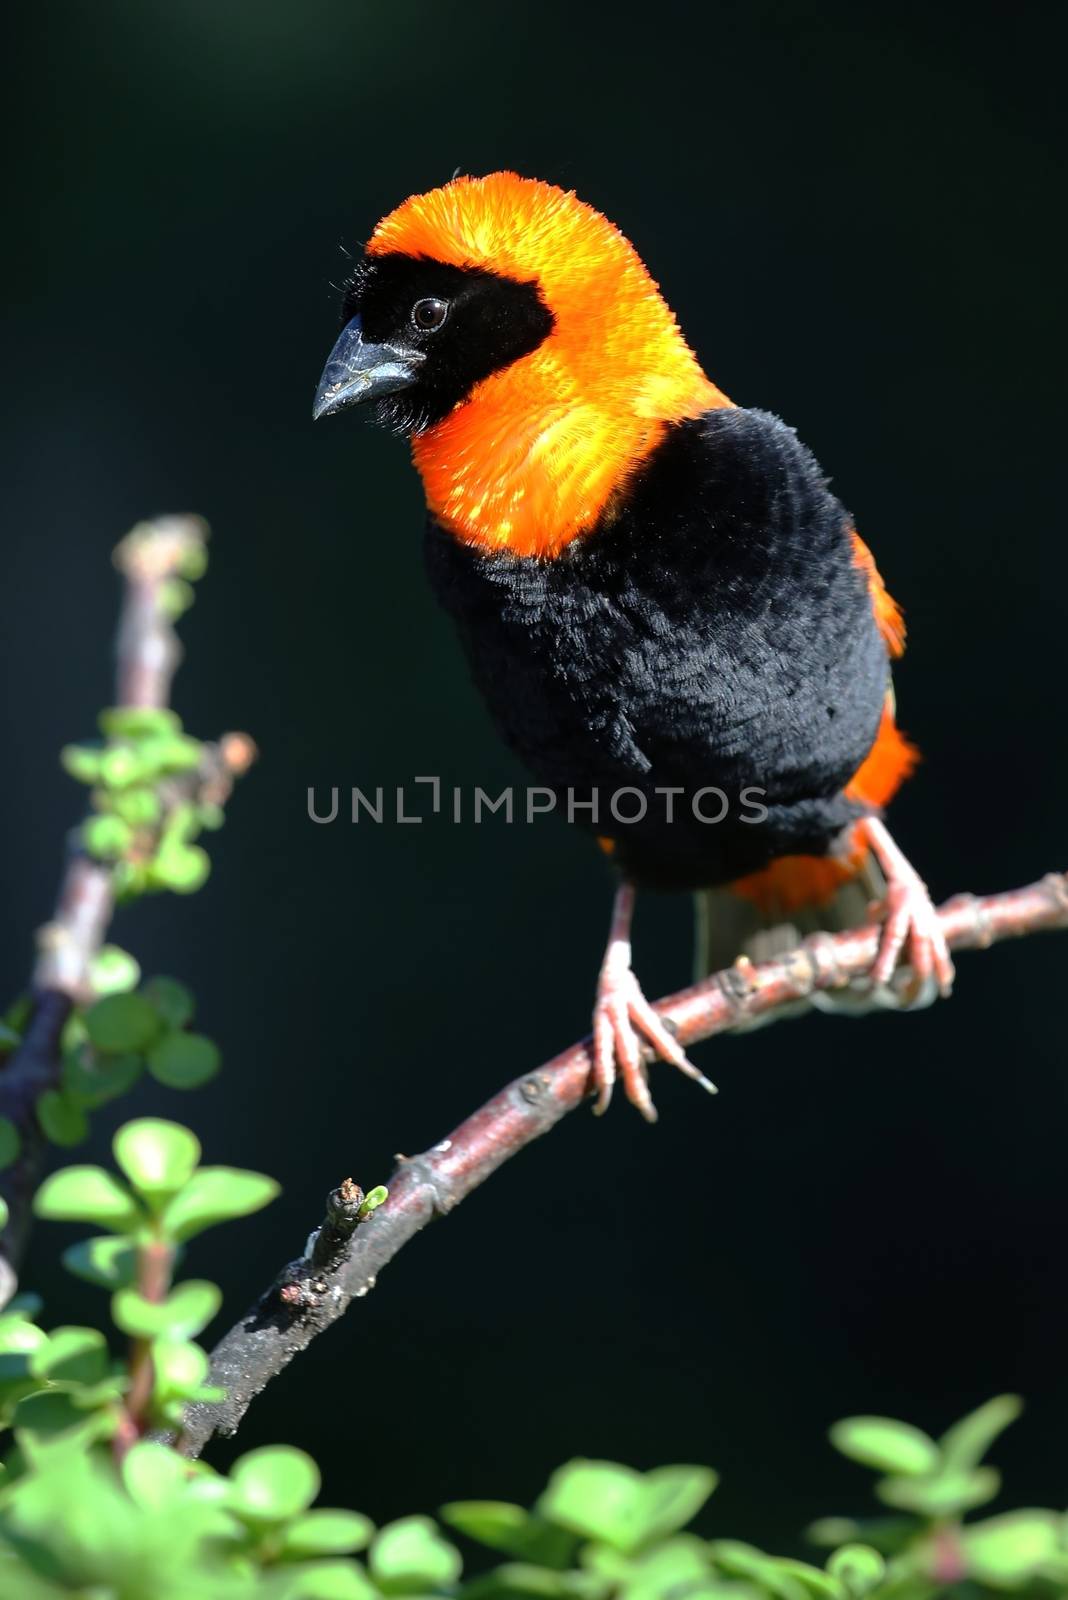 Handsome orange and black Bishop Weaver bird